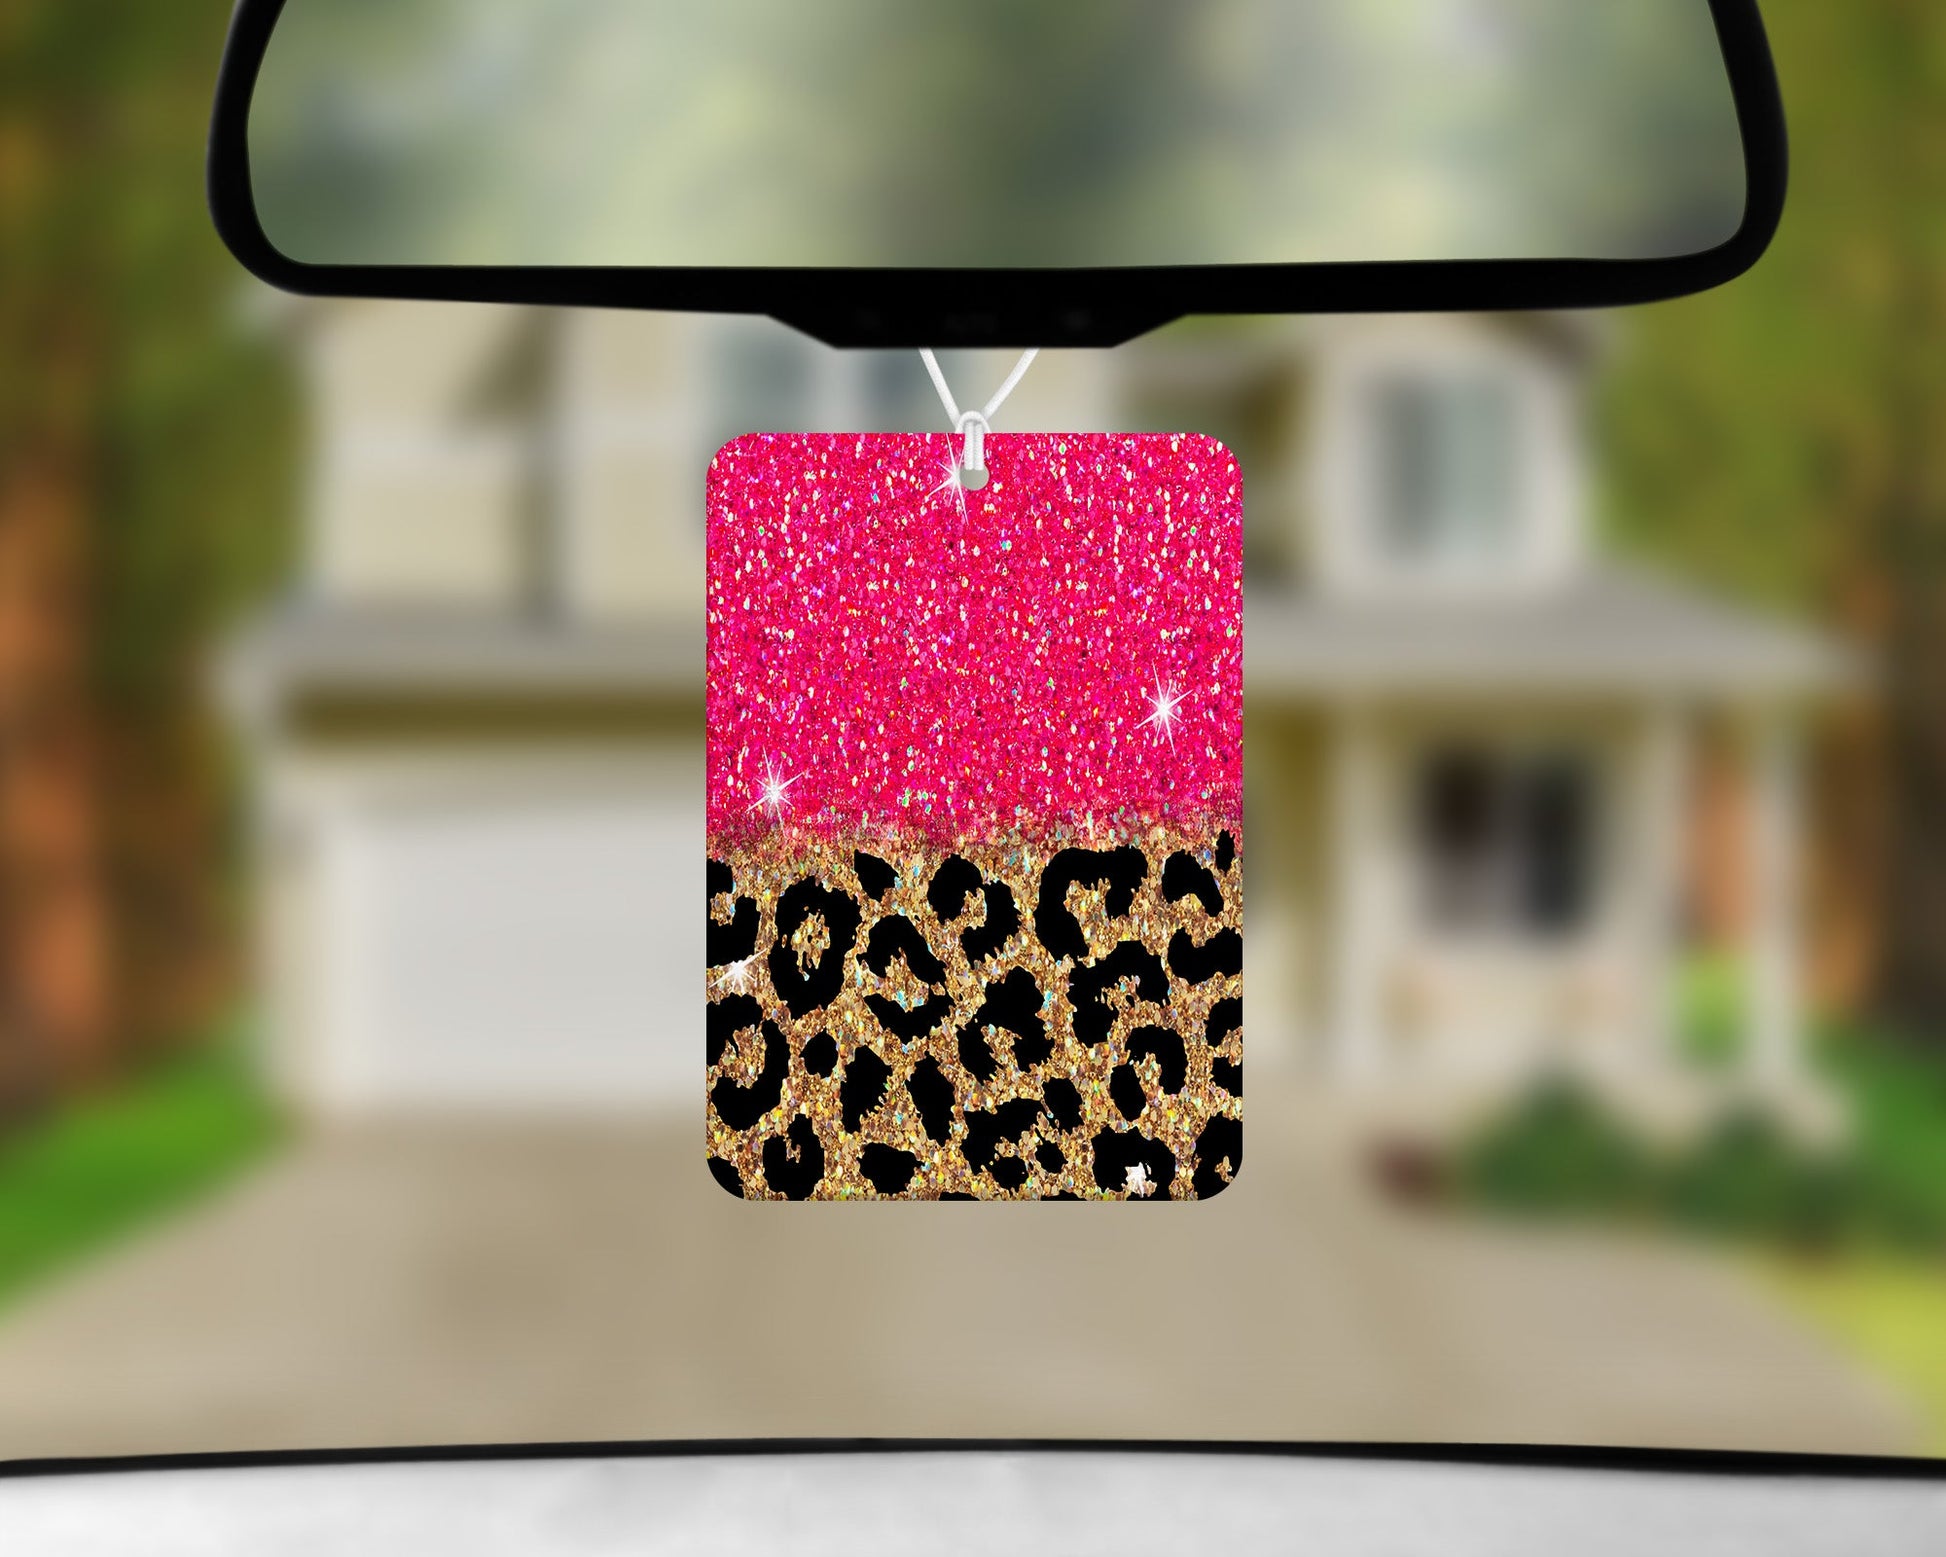 Hot Pink Leopard Print|Freshie|Includes Scent Bottle - Vehicle Air Freshener